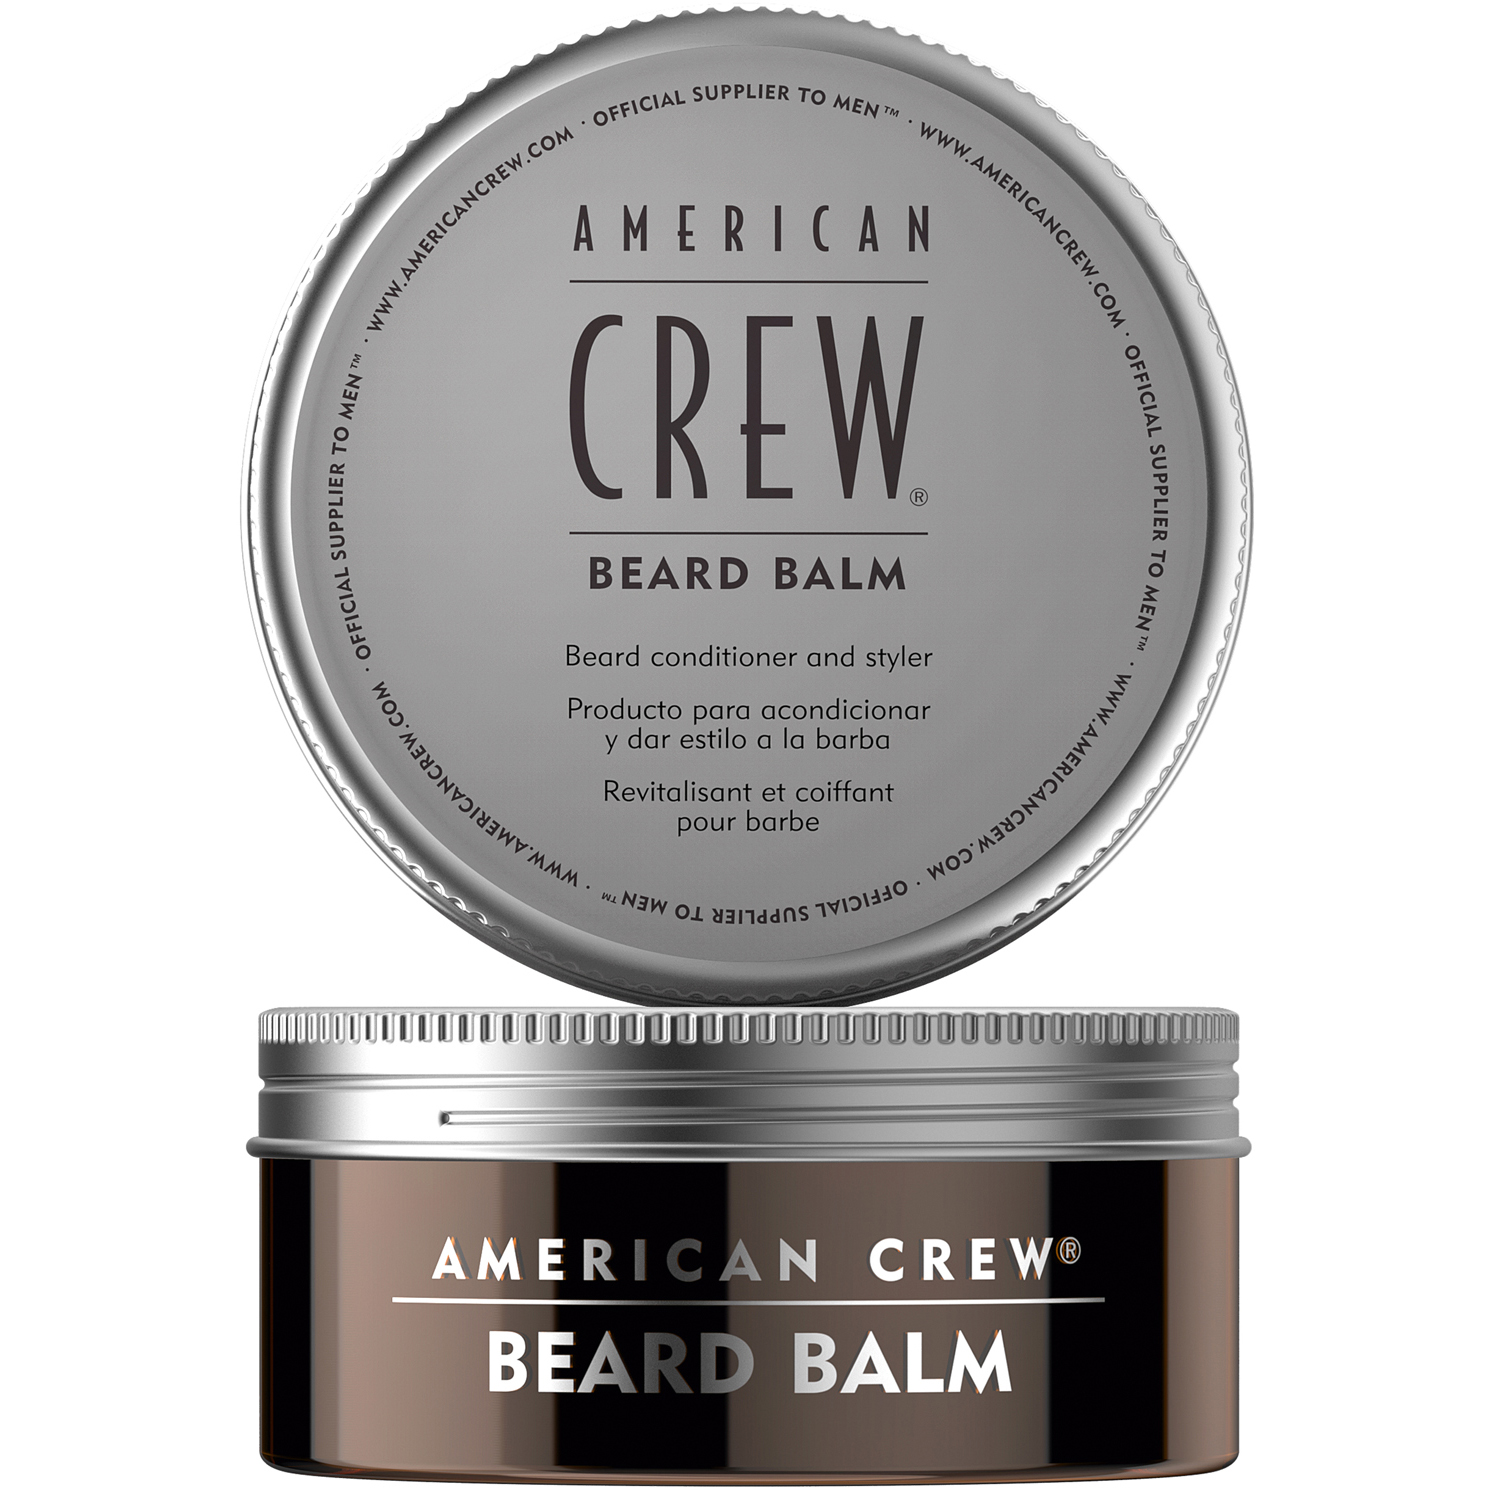 American Crew Бальзам для бороды Beard Balm, 60 г (American Crew, Beard) american crew beard balm бальзам для бороды 60 гр